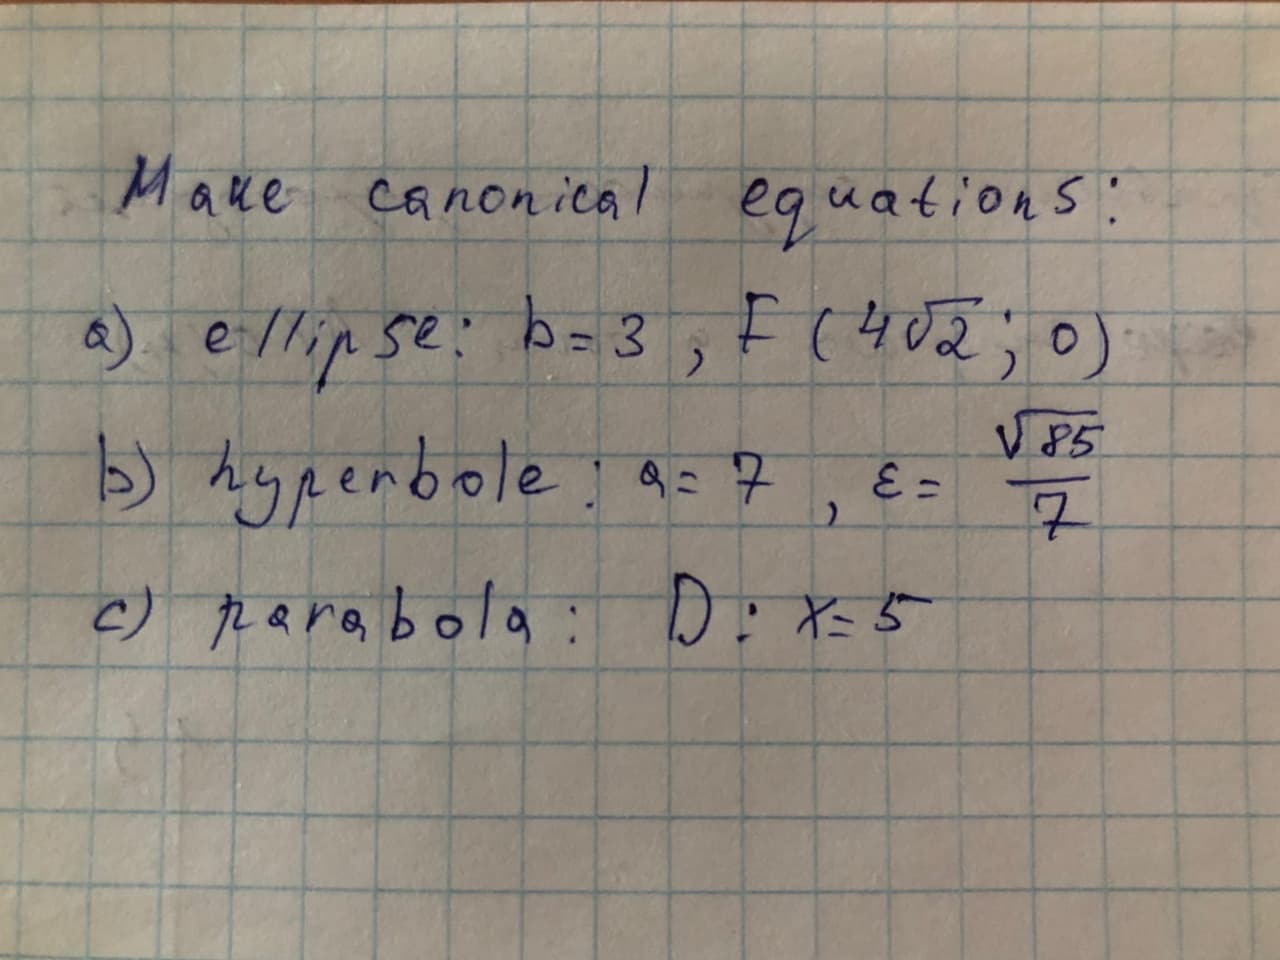 Make canonical eguations:
equa
e llip se:
) hypenbole a= 7
a) : b= 3 , F(402;
%3D
V 85
7.
c) para bola
: D: xs5
